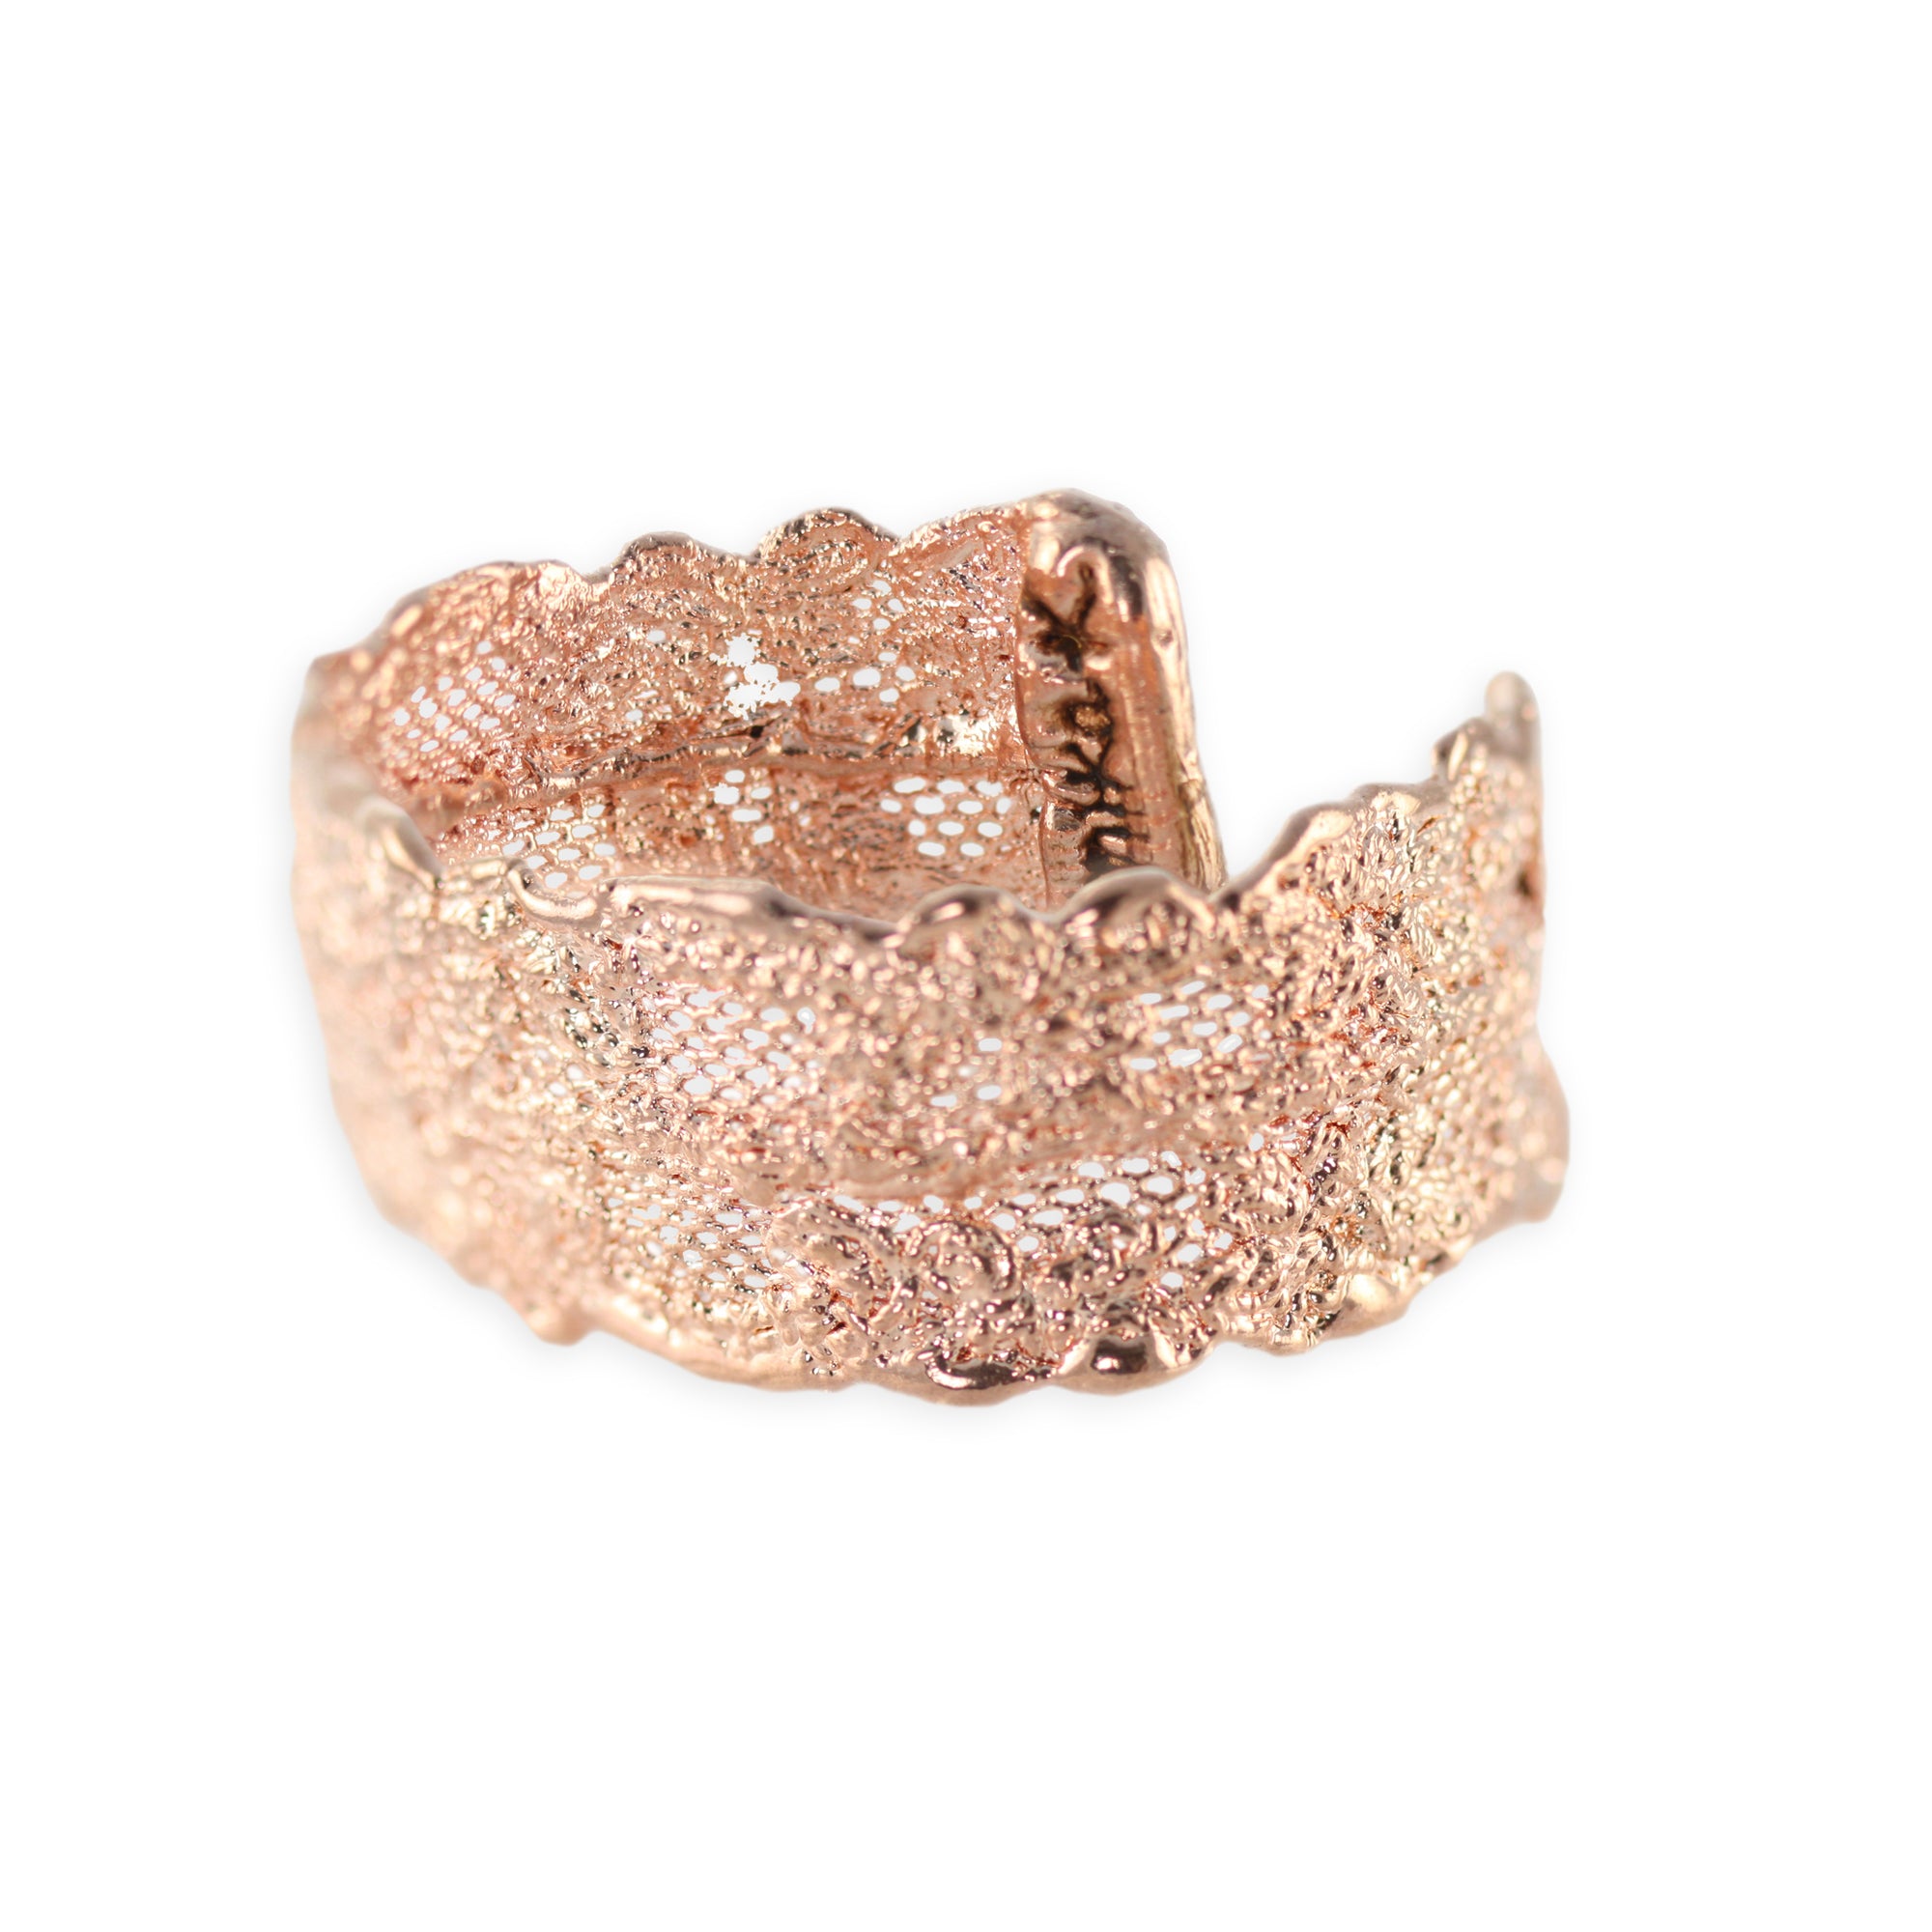 Marlene double scalloped lace bracelet in rose gold.